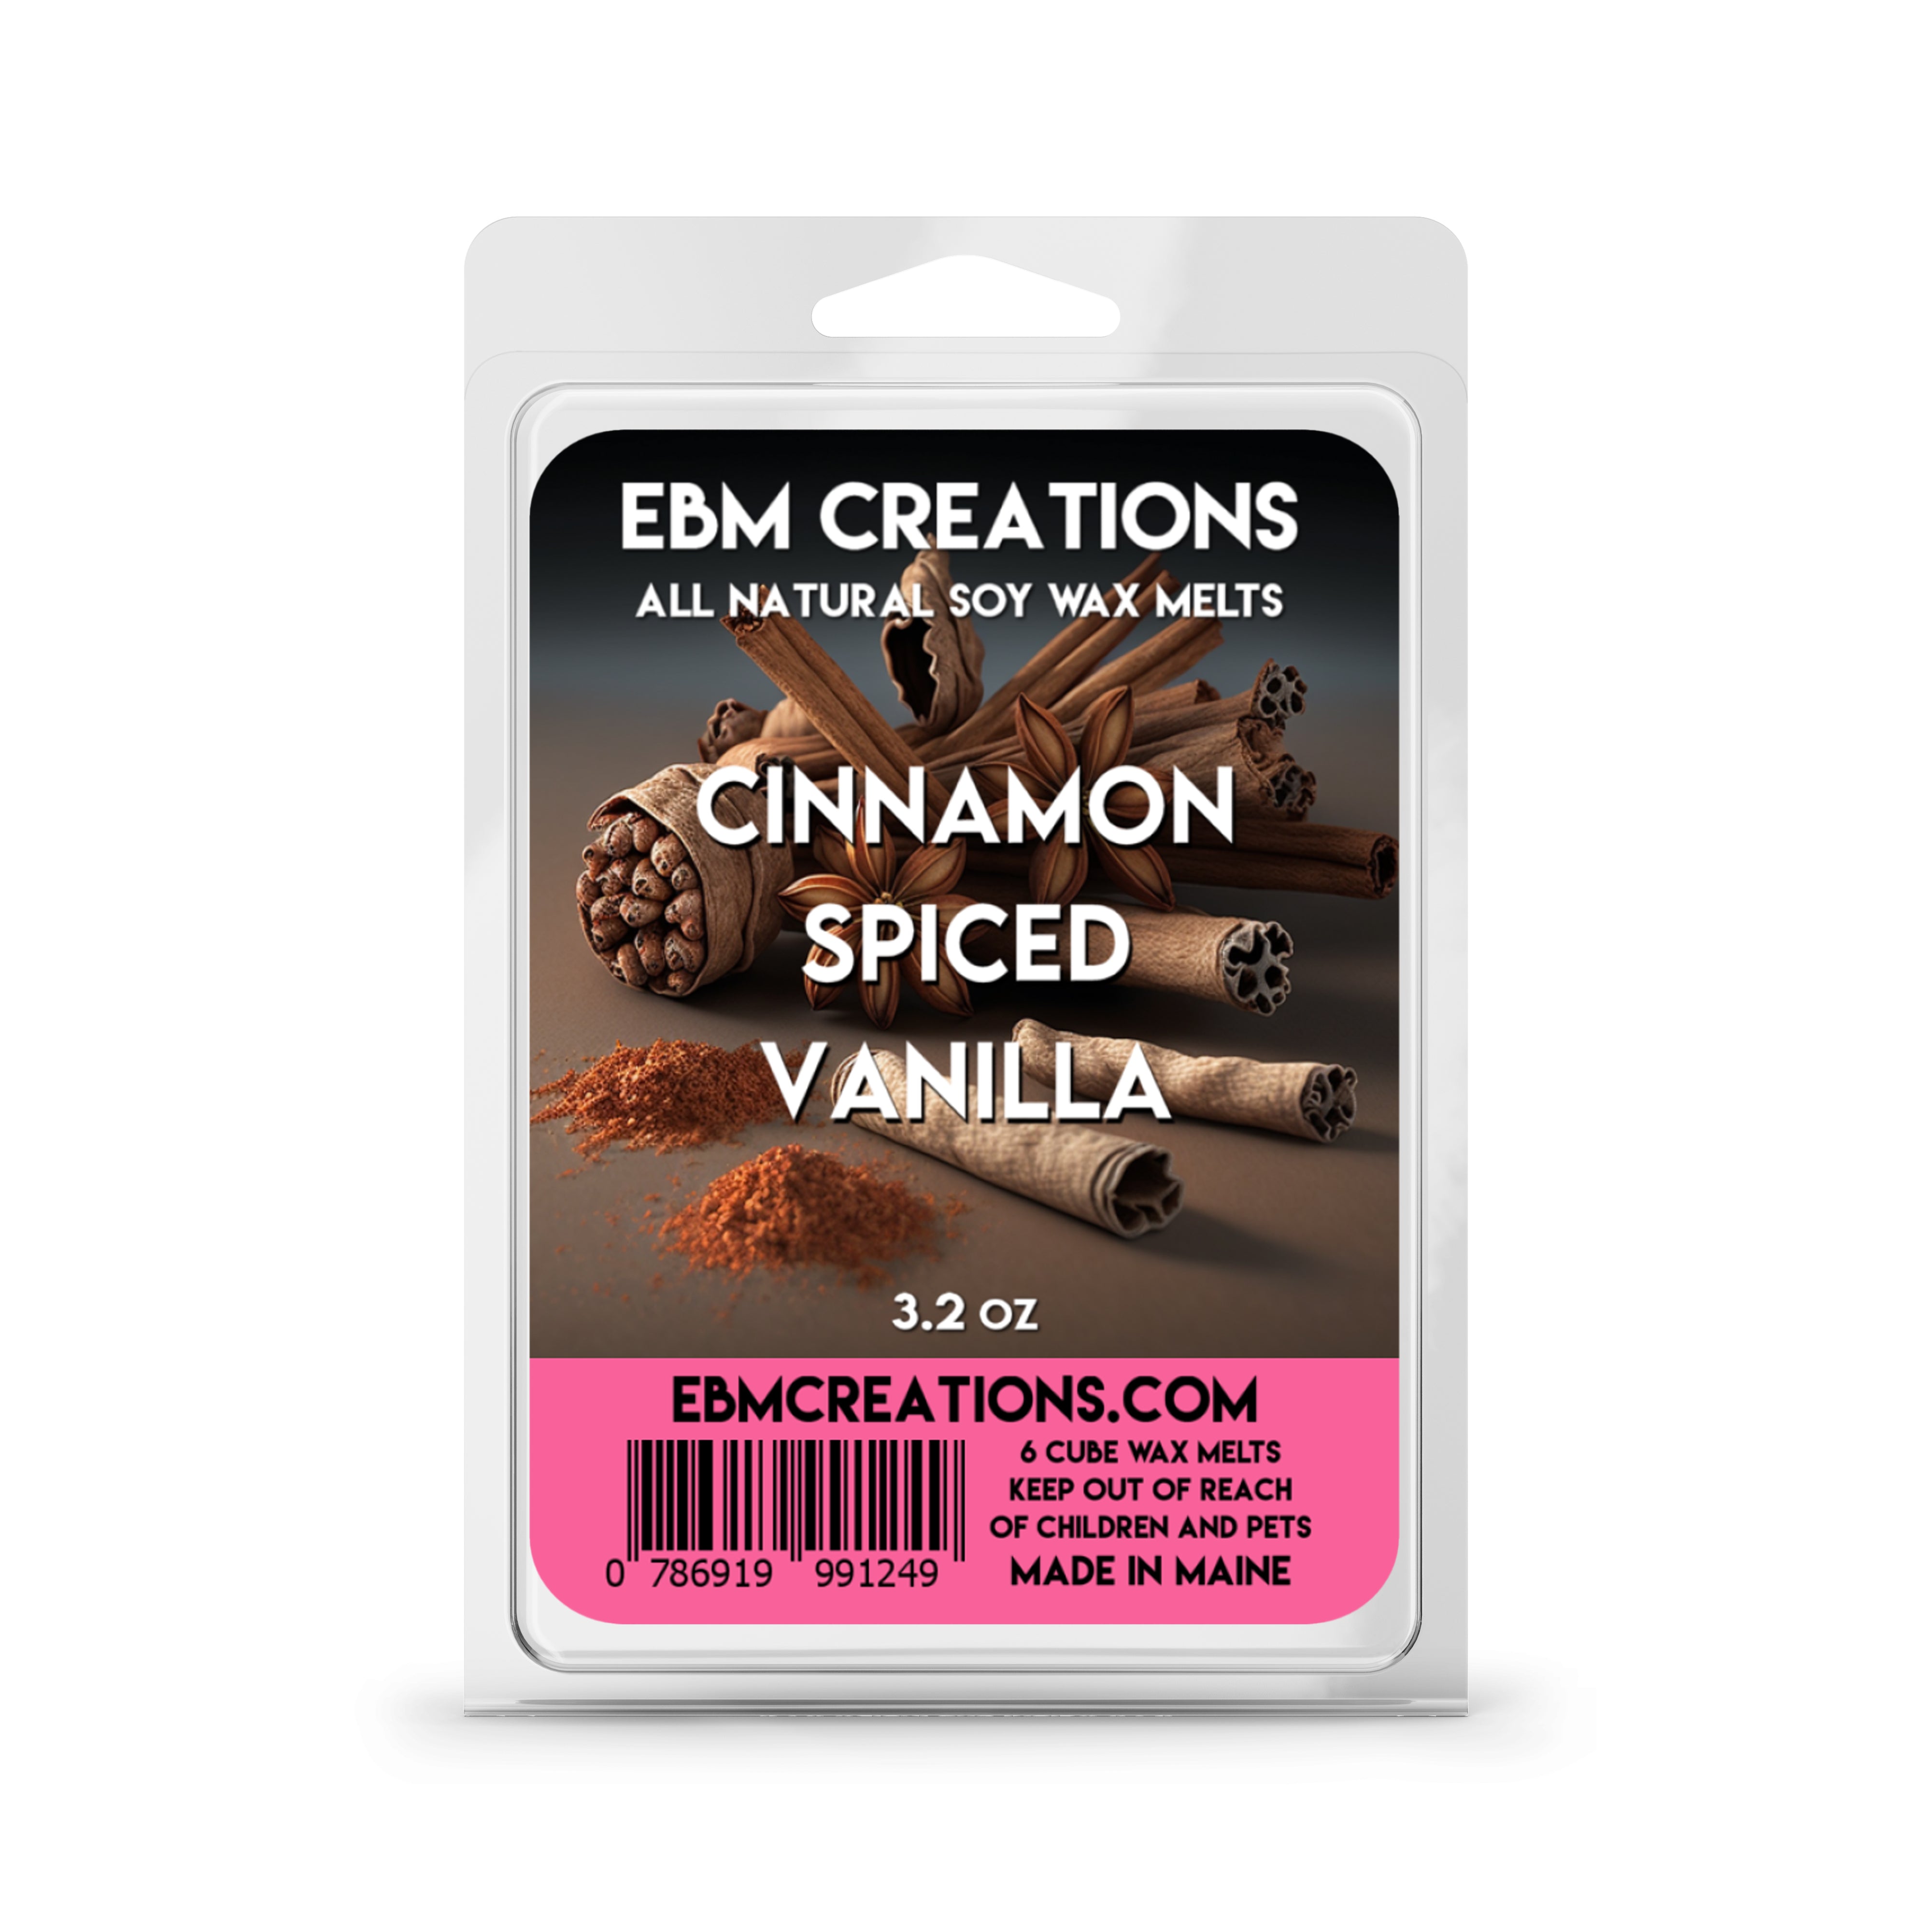 Cinnamon Spiced Vanilla - 3.2 oz Clamshell